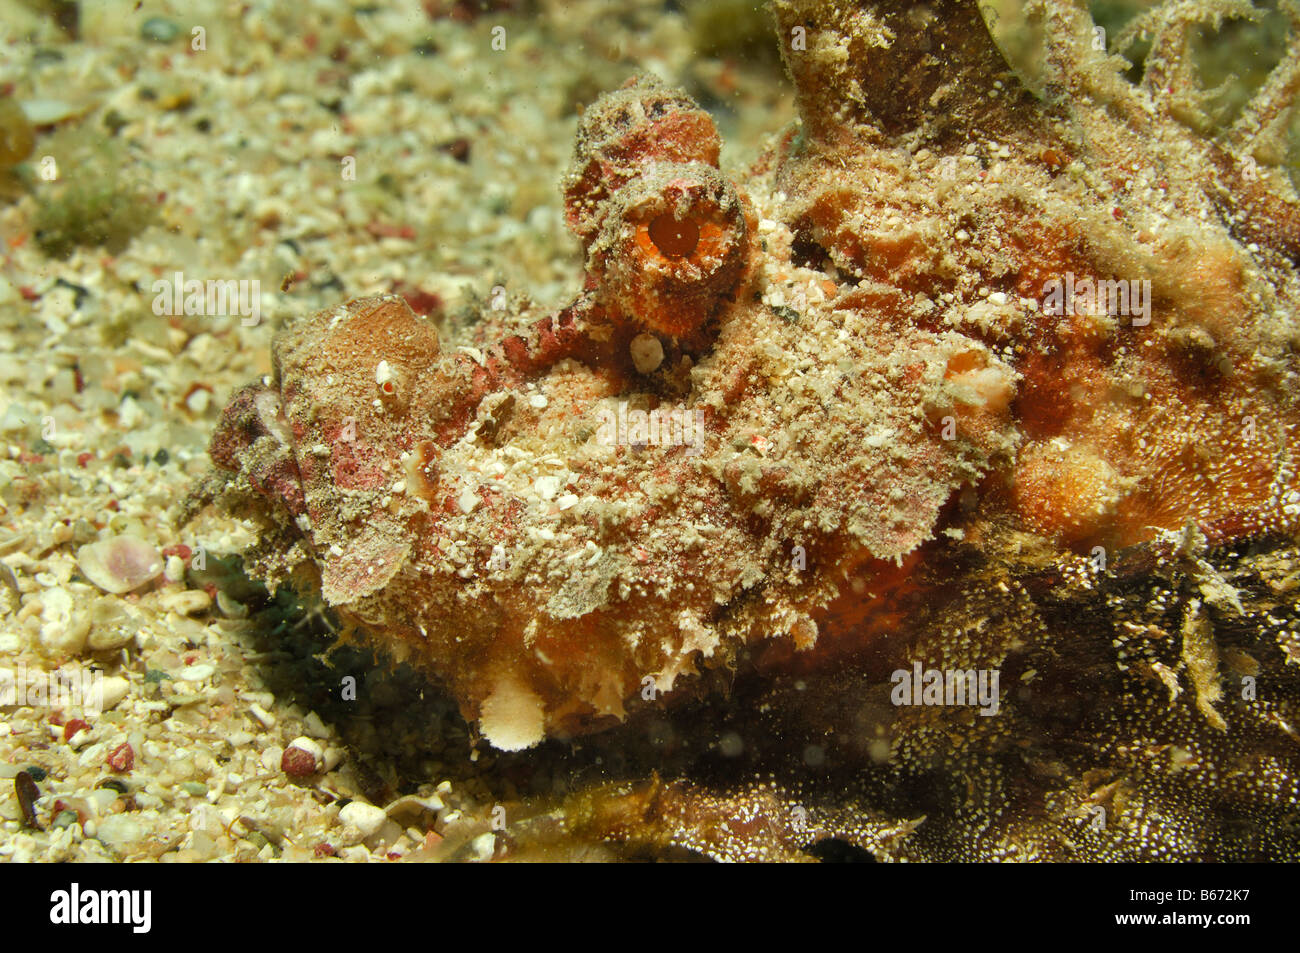 Spiny Devilfish Inimicus filamentosus Marsa Alam Red Sea Egypt Stock Photo